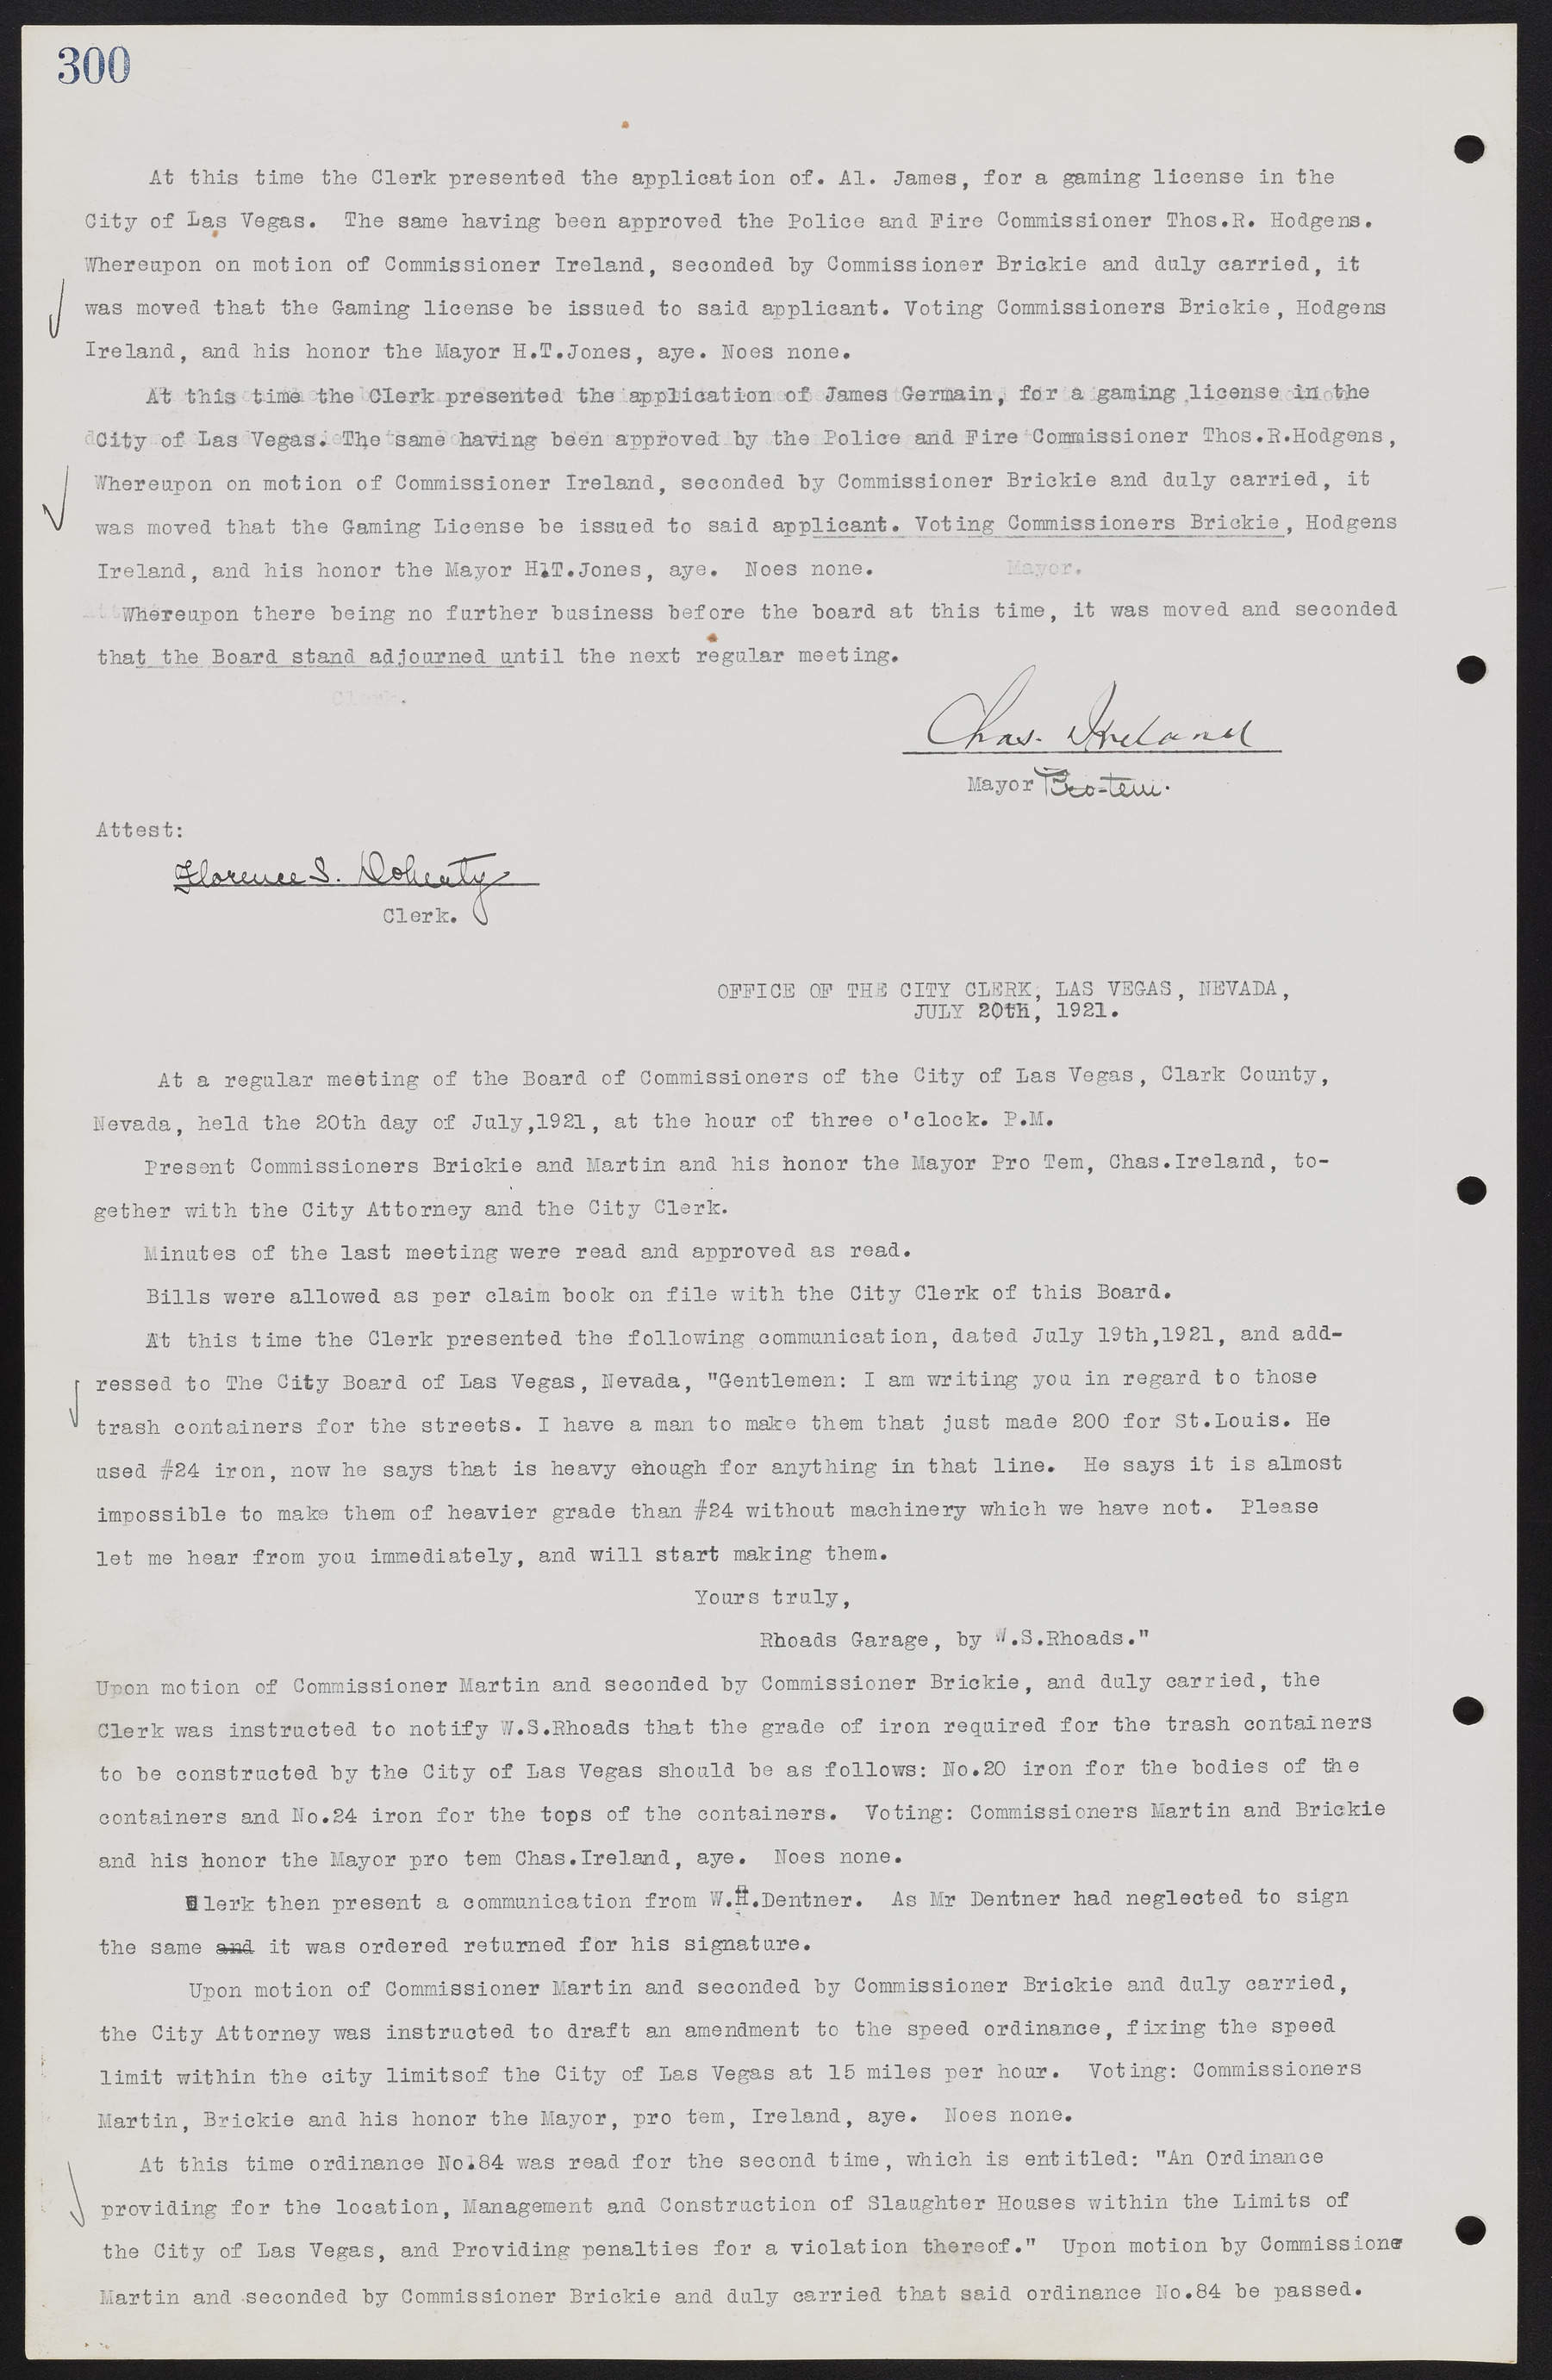 Las Vegas City Commission Minutes, June 22, 1911 to February 7, 1922, lvc000001-316